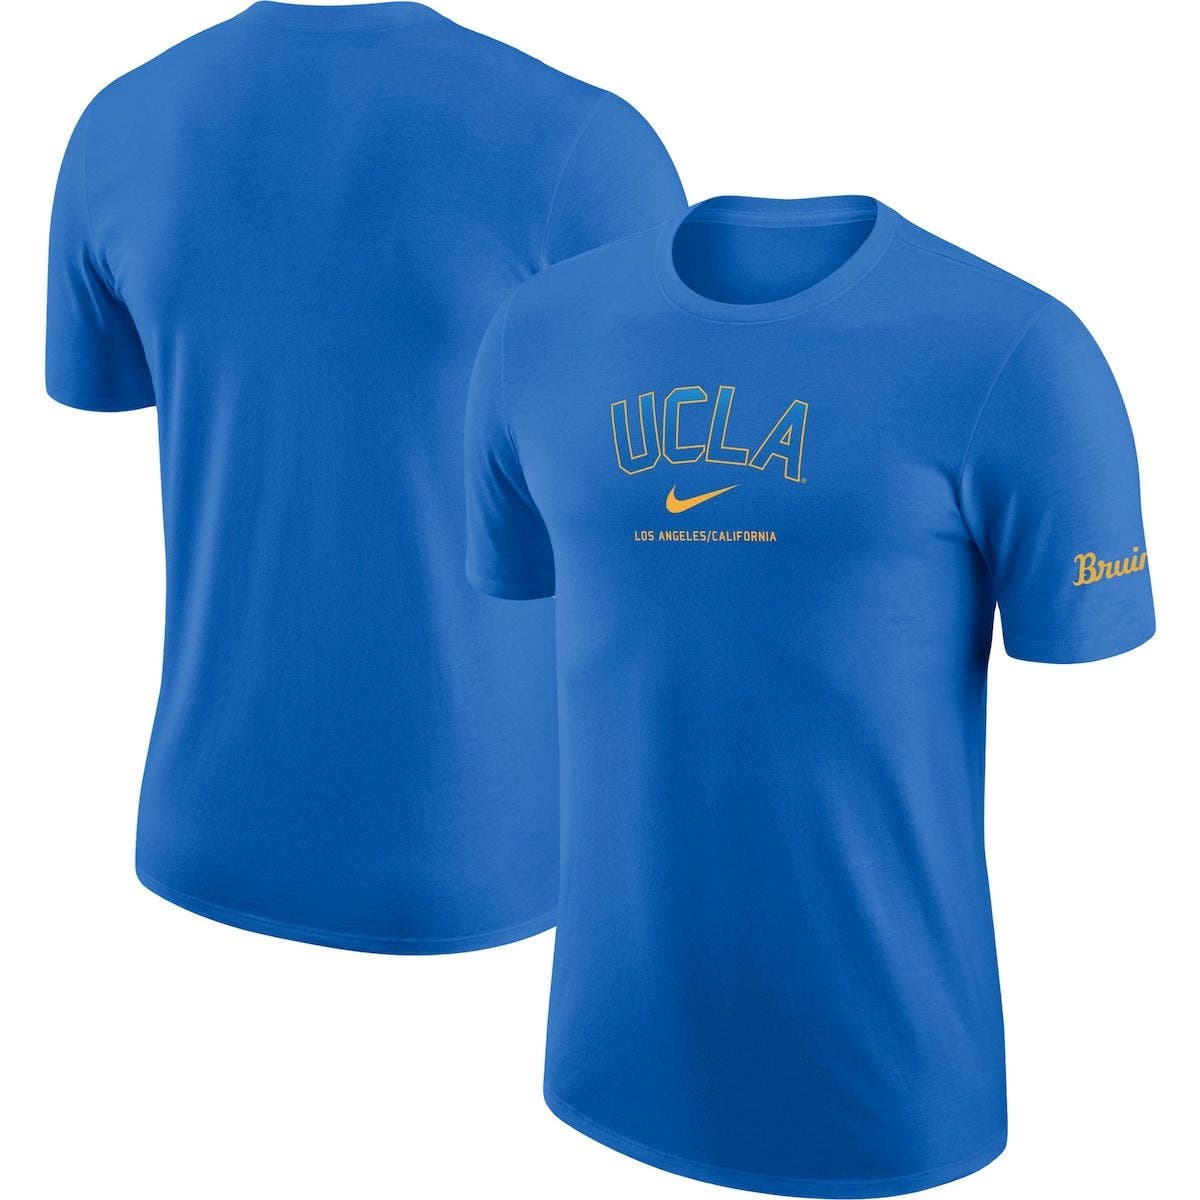 Men's Nike Blue UCLA Bruins DNA Team Performance T-Shirt